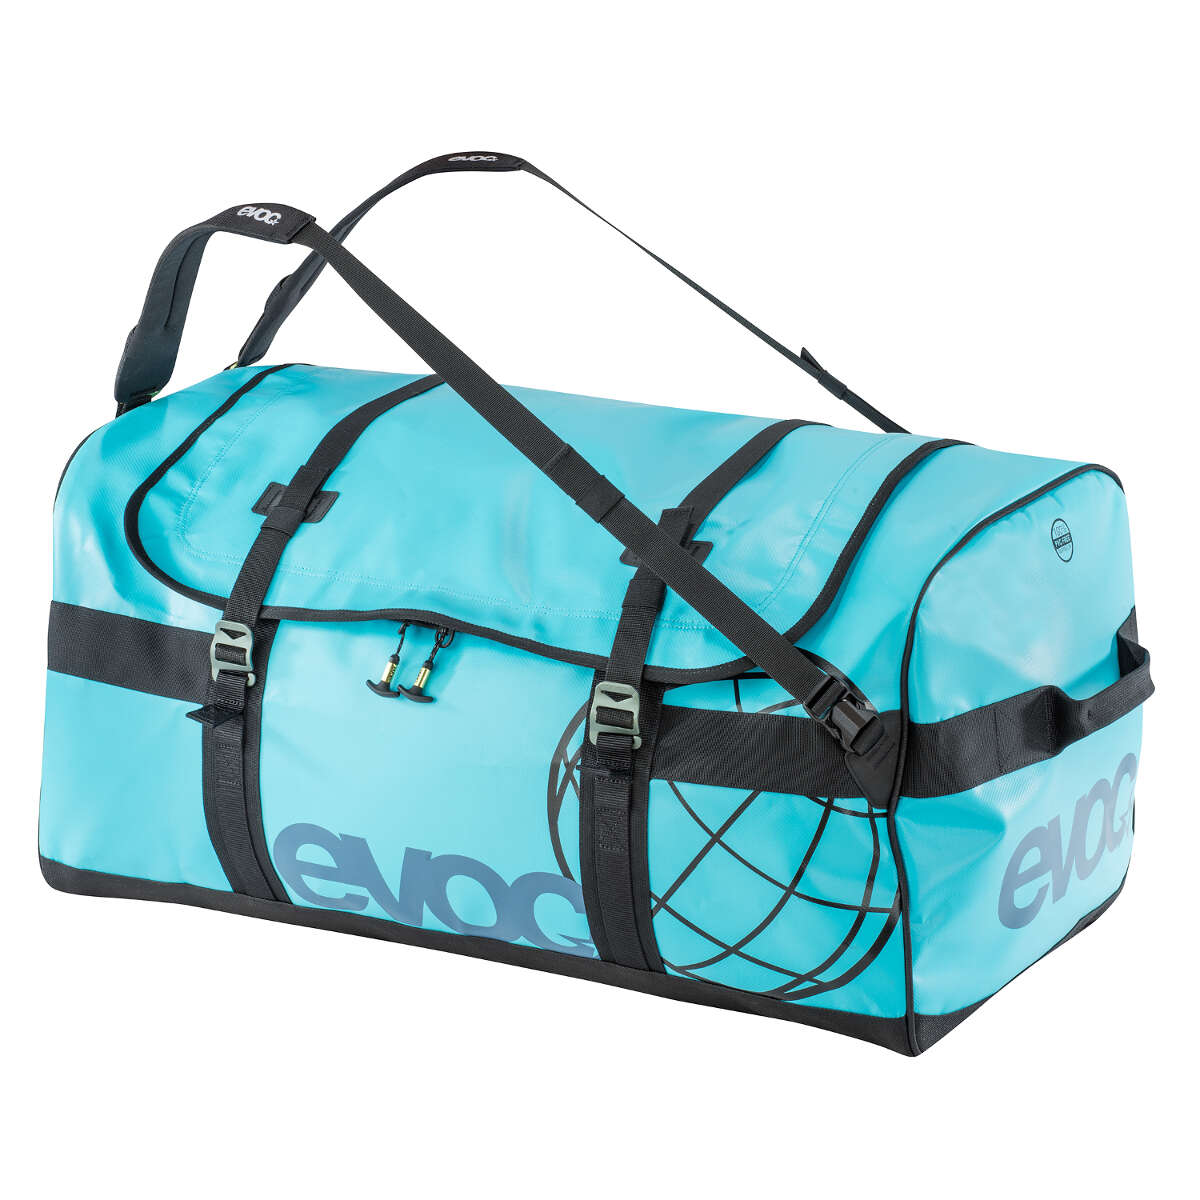 Evoc Reisetasche Duffle Bag Neon Blau, 60 Liter